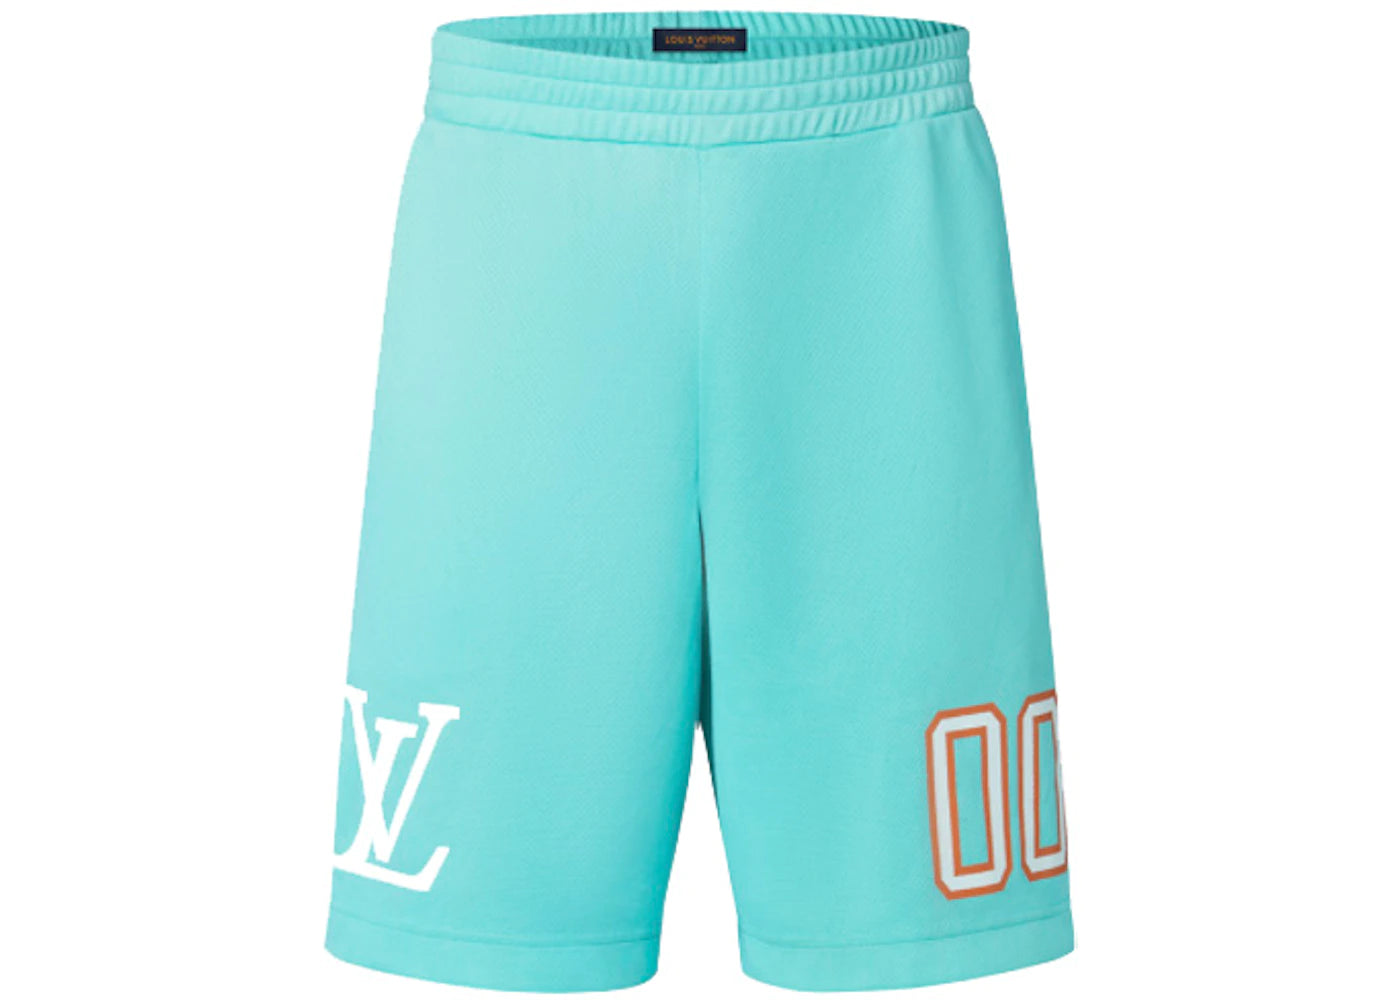 Louis Vuitton Hockey Jersey T-shirt Mint & Short with Patch Mint